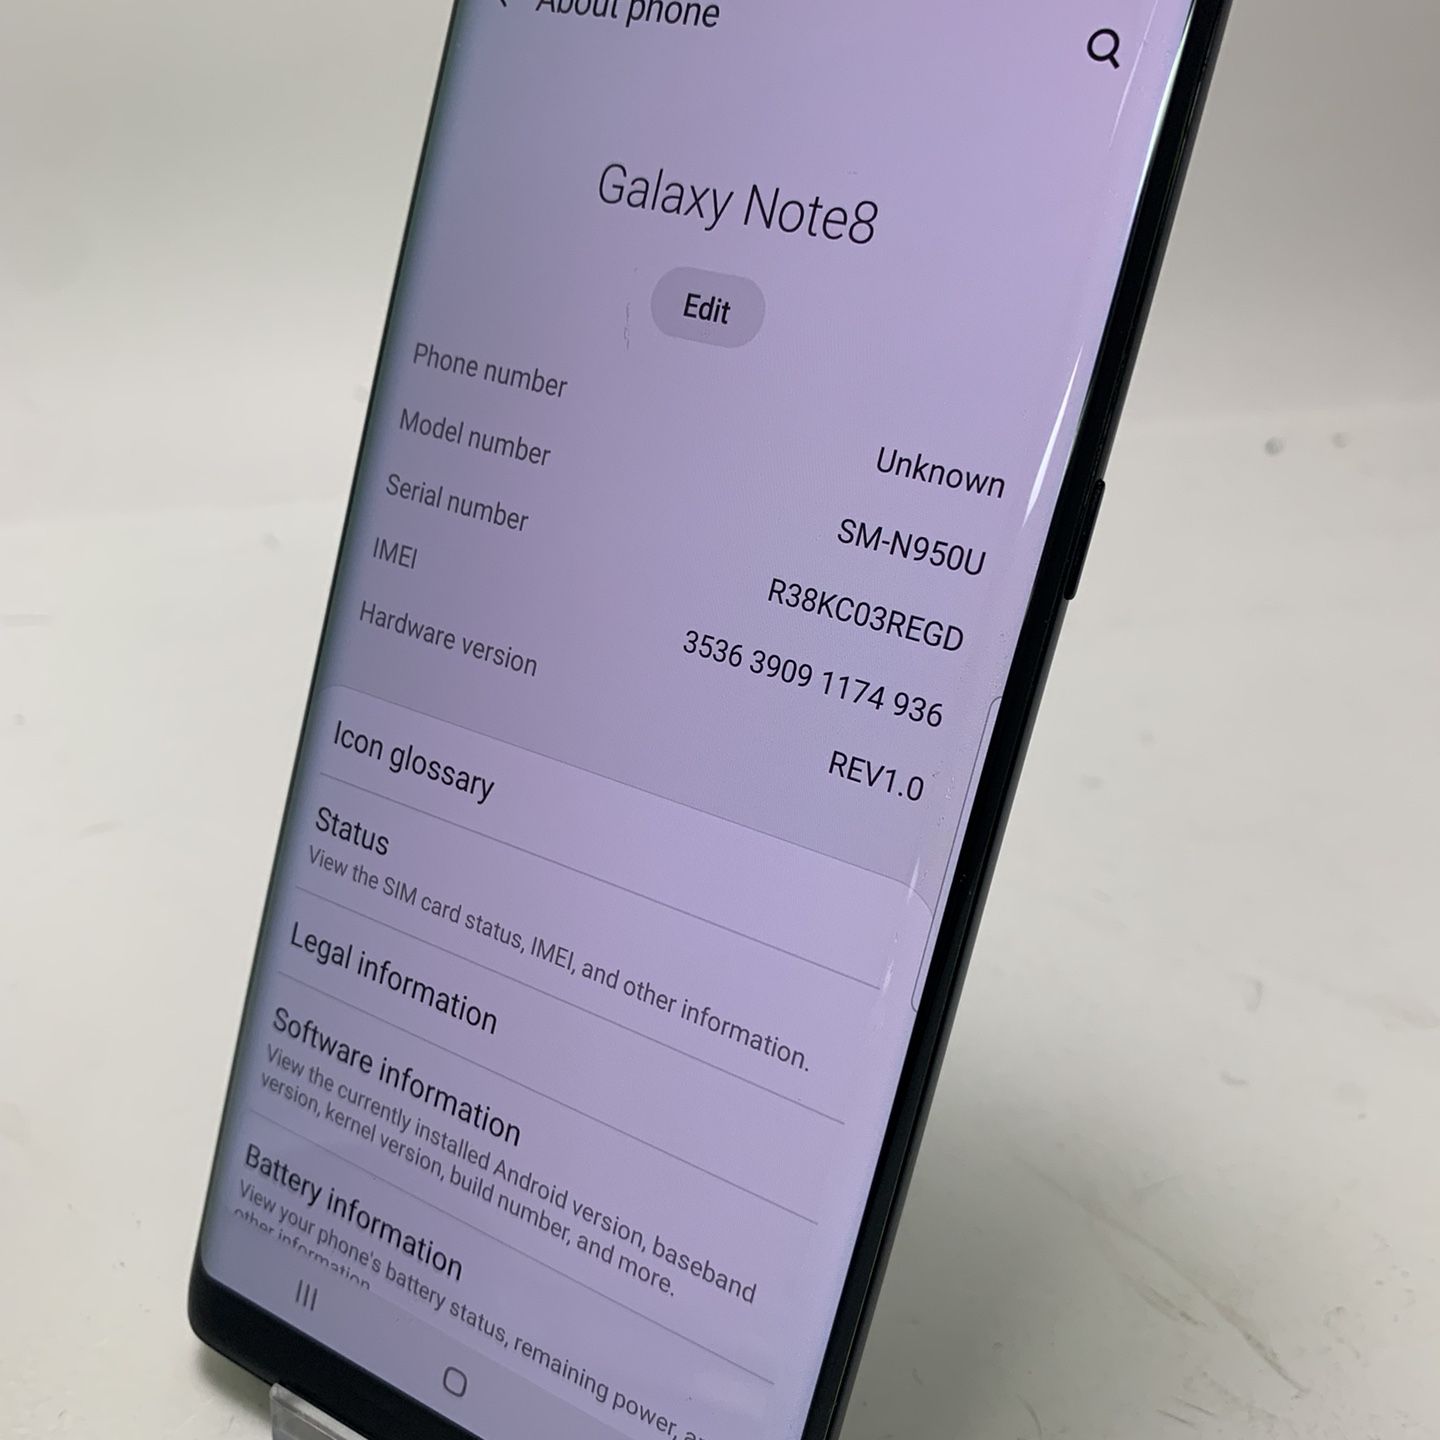 Samsung Galaxy Note 8 Black 64GB UNLOCKED With 30 Day Warranty 